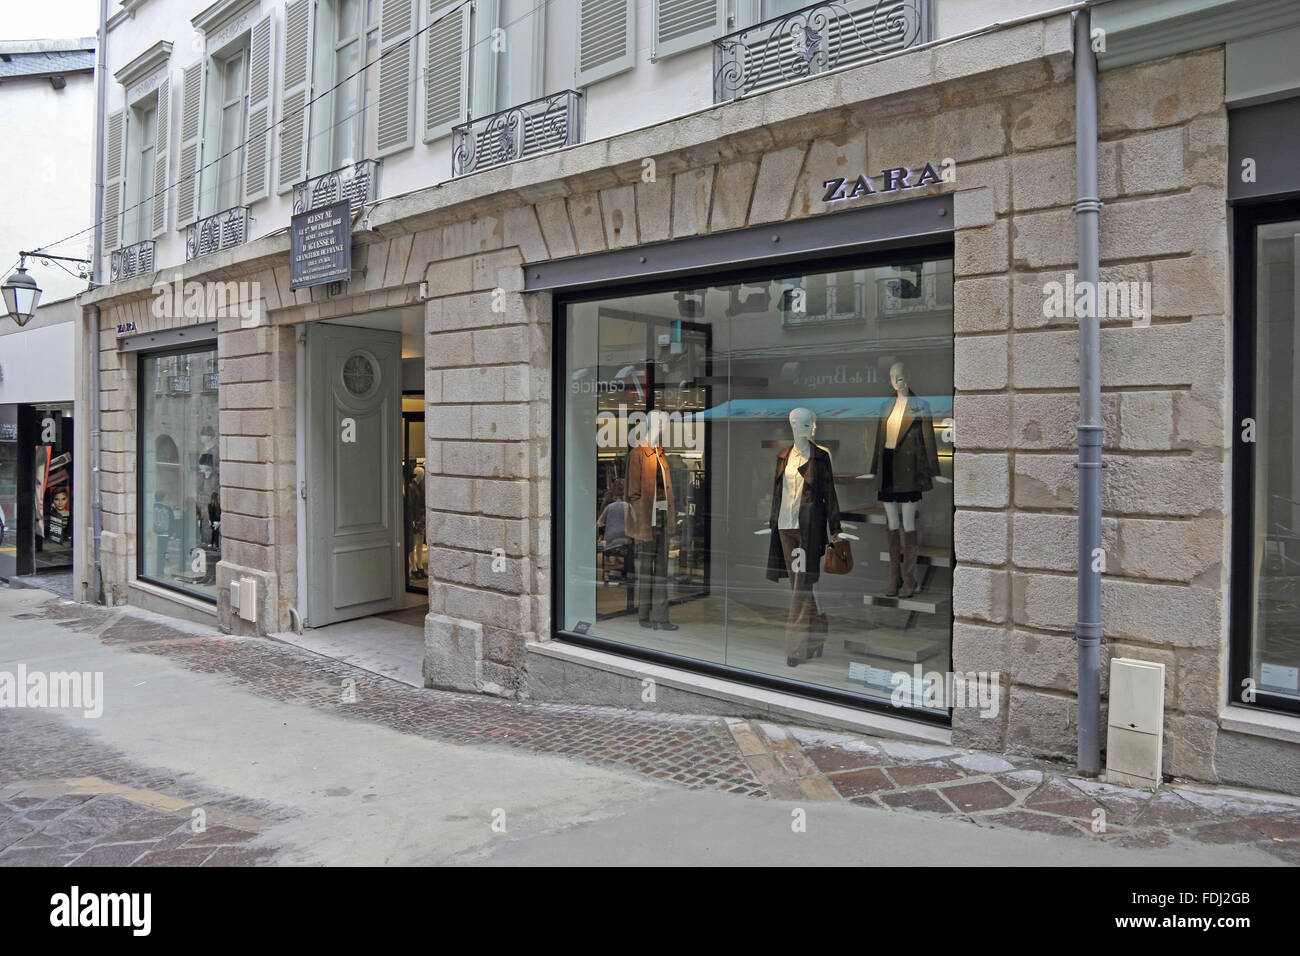 Zara fashion shop, Limoges, France Stock Photo - Alamy